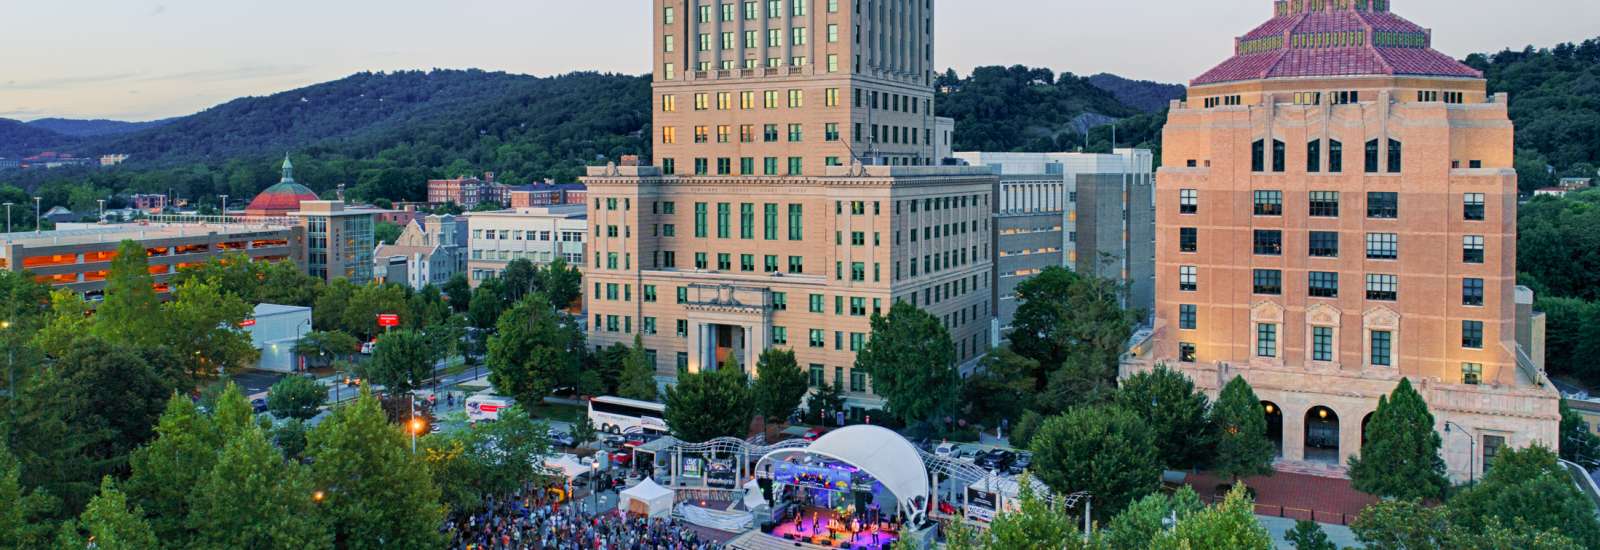 Downtown Asheville LEAF Festival